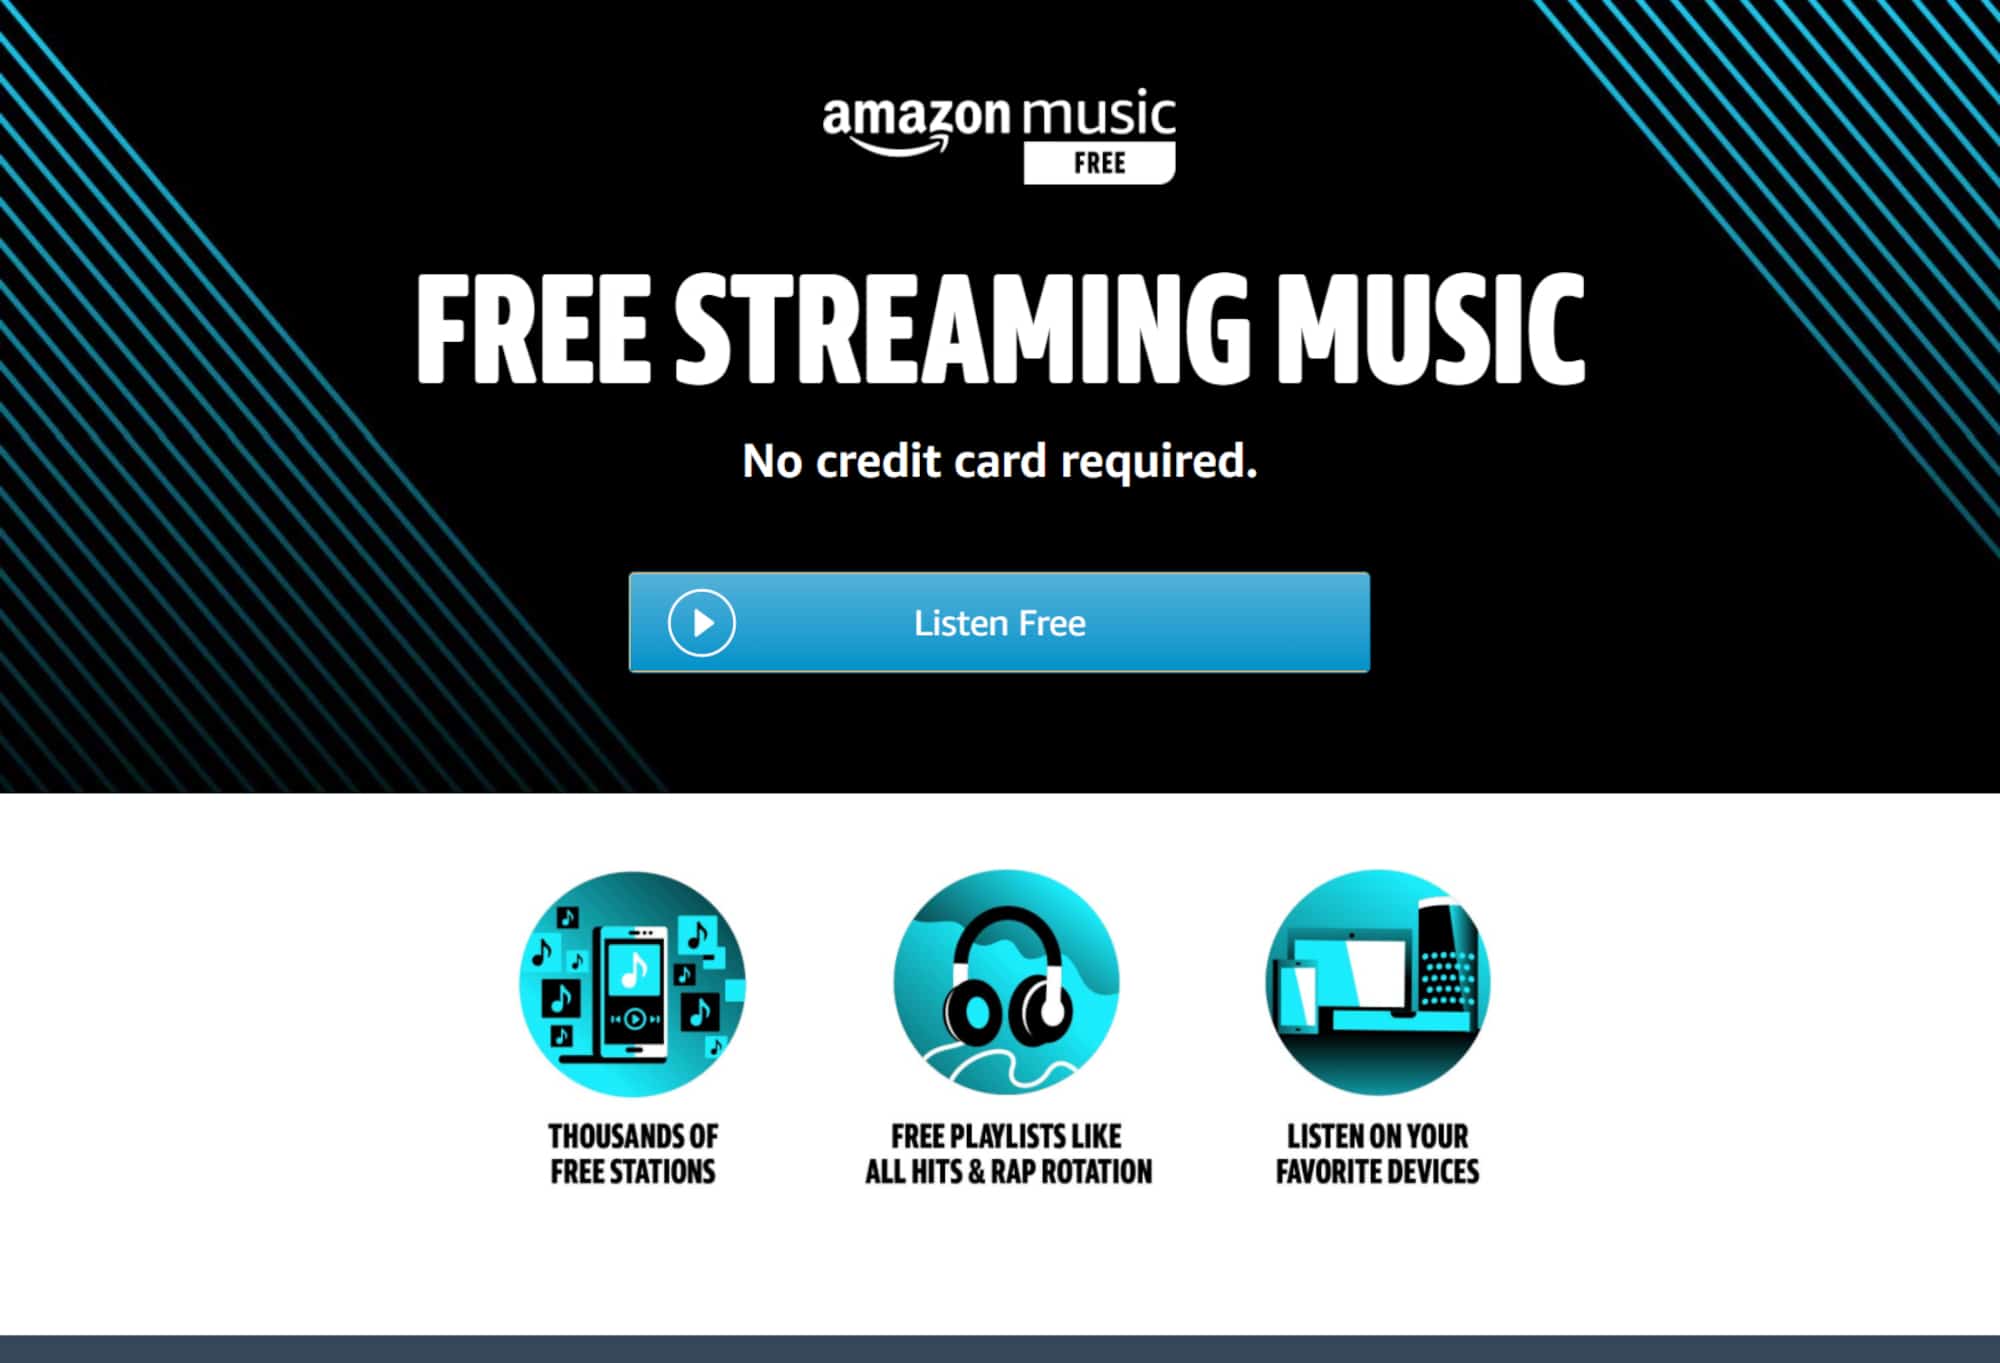 Amazon Music Free website screenshot